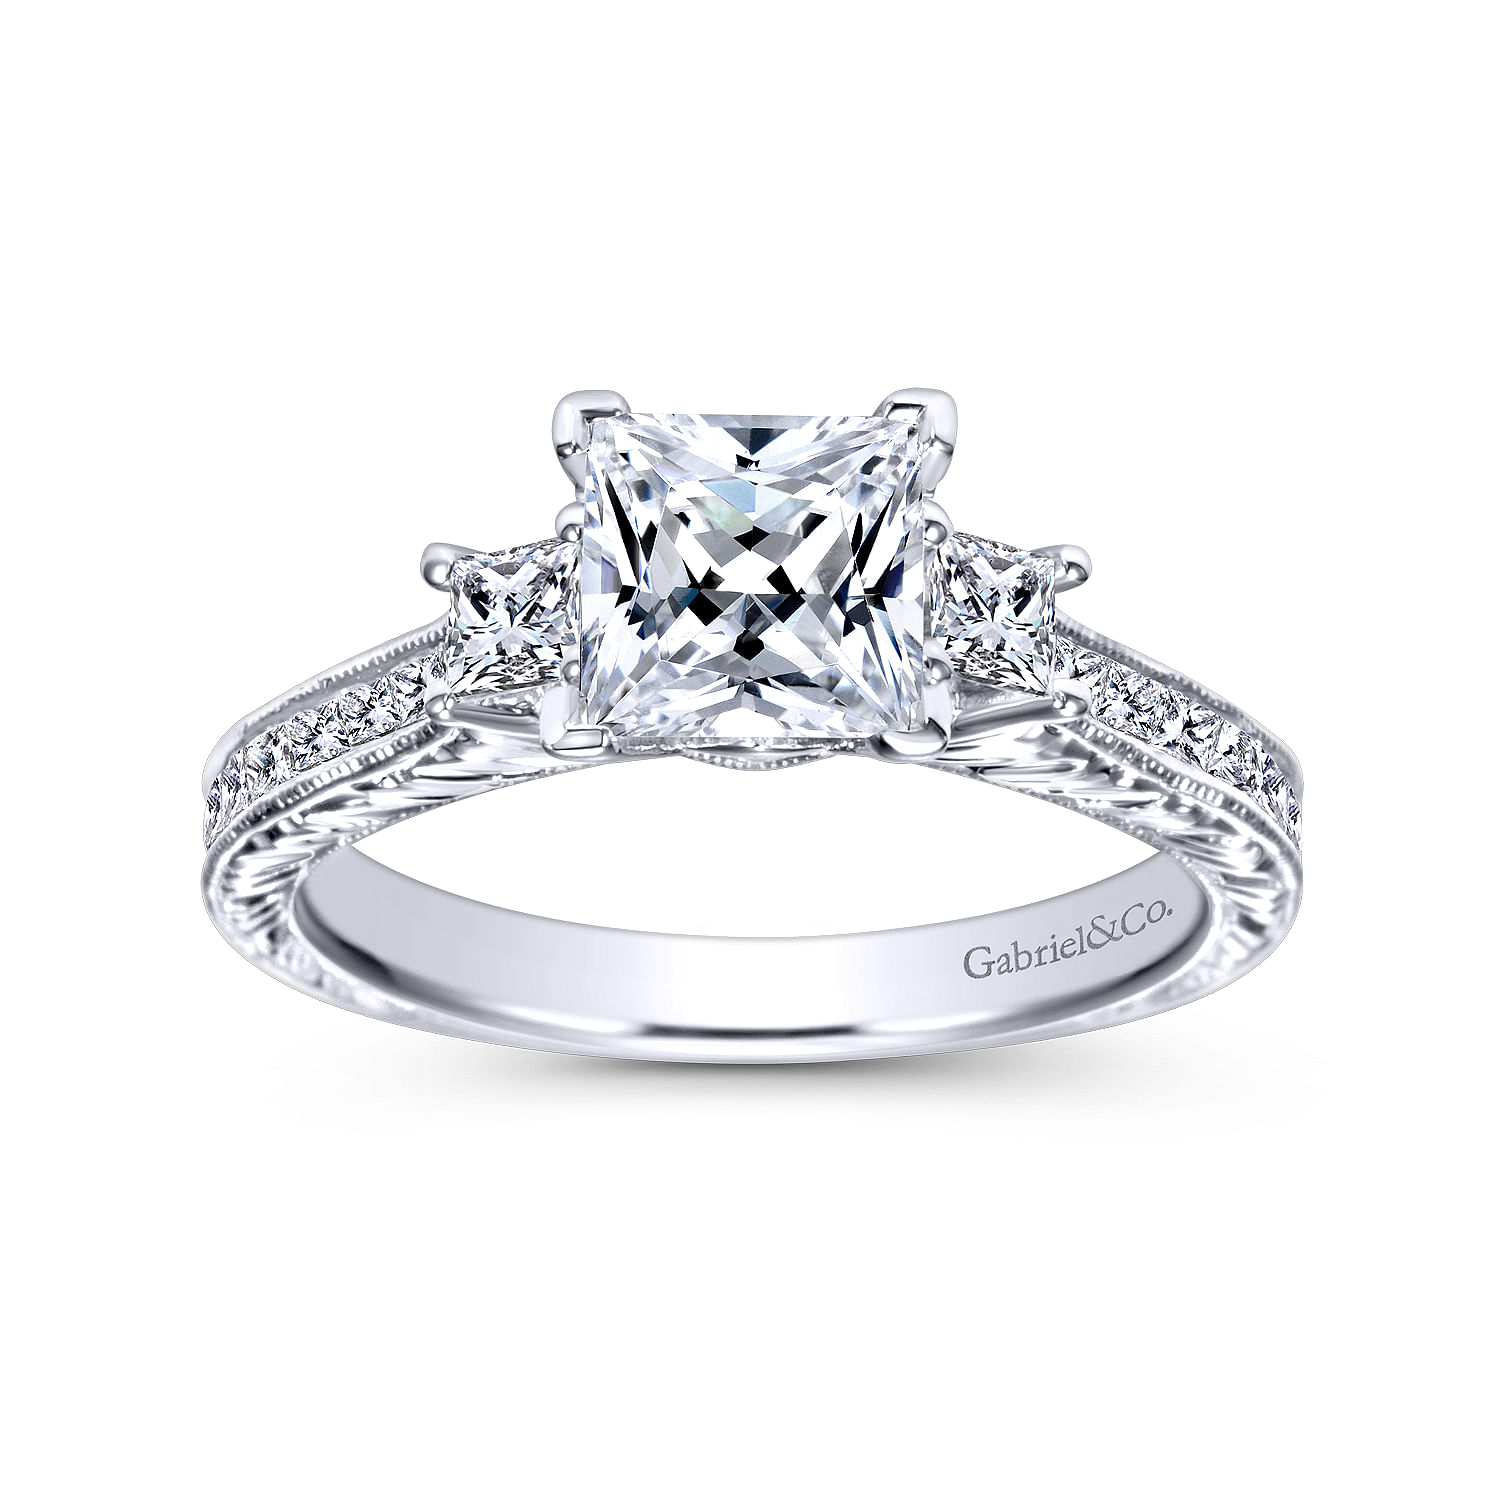 Vintage Inspired 14K White Gold Princess Cut Three Stone Diamond Channel Set Engagement Ring